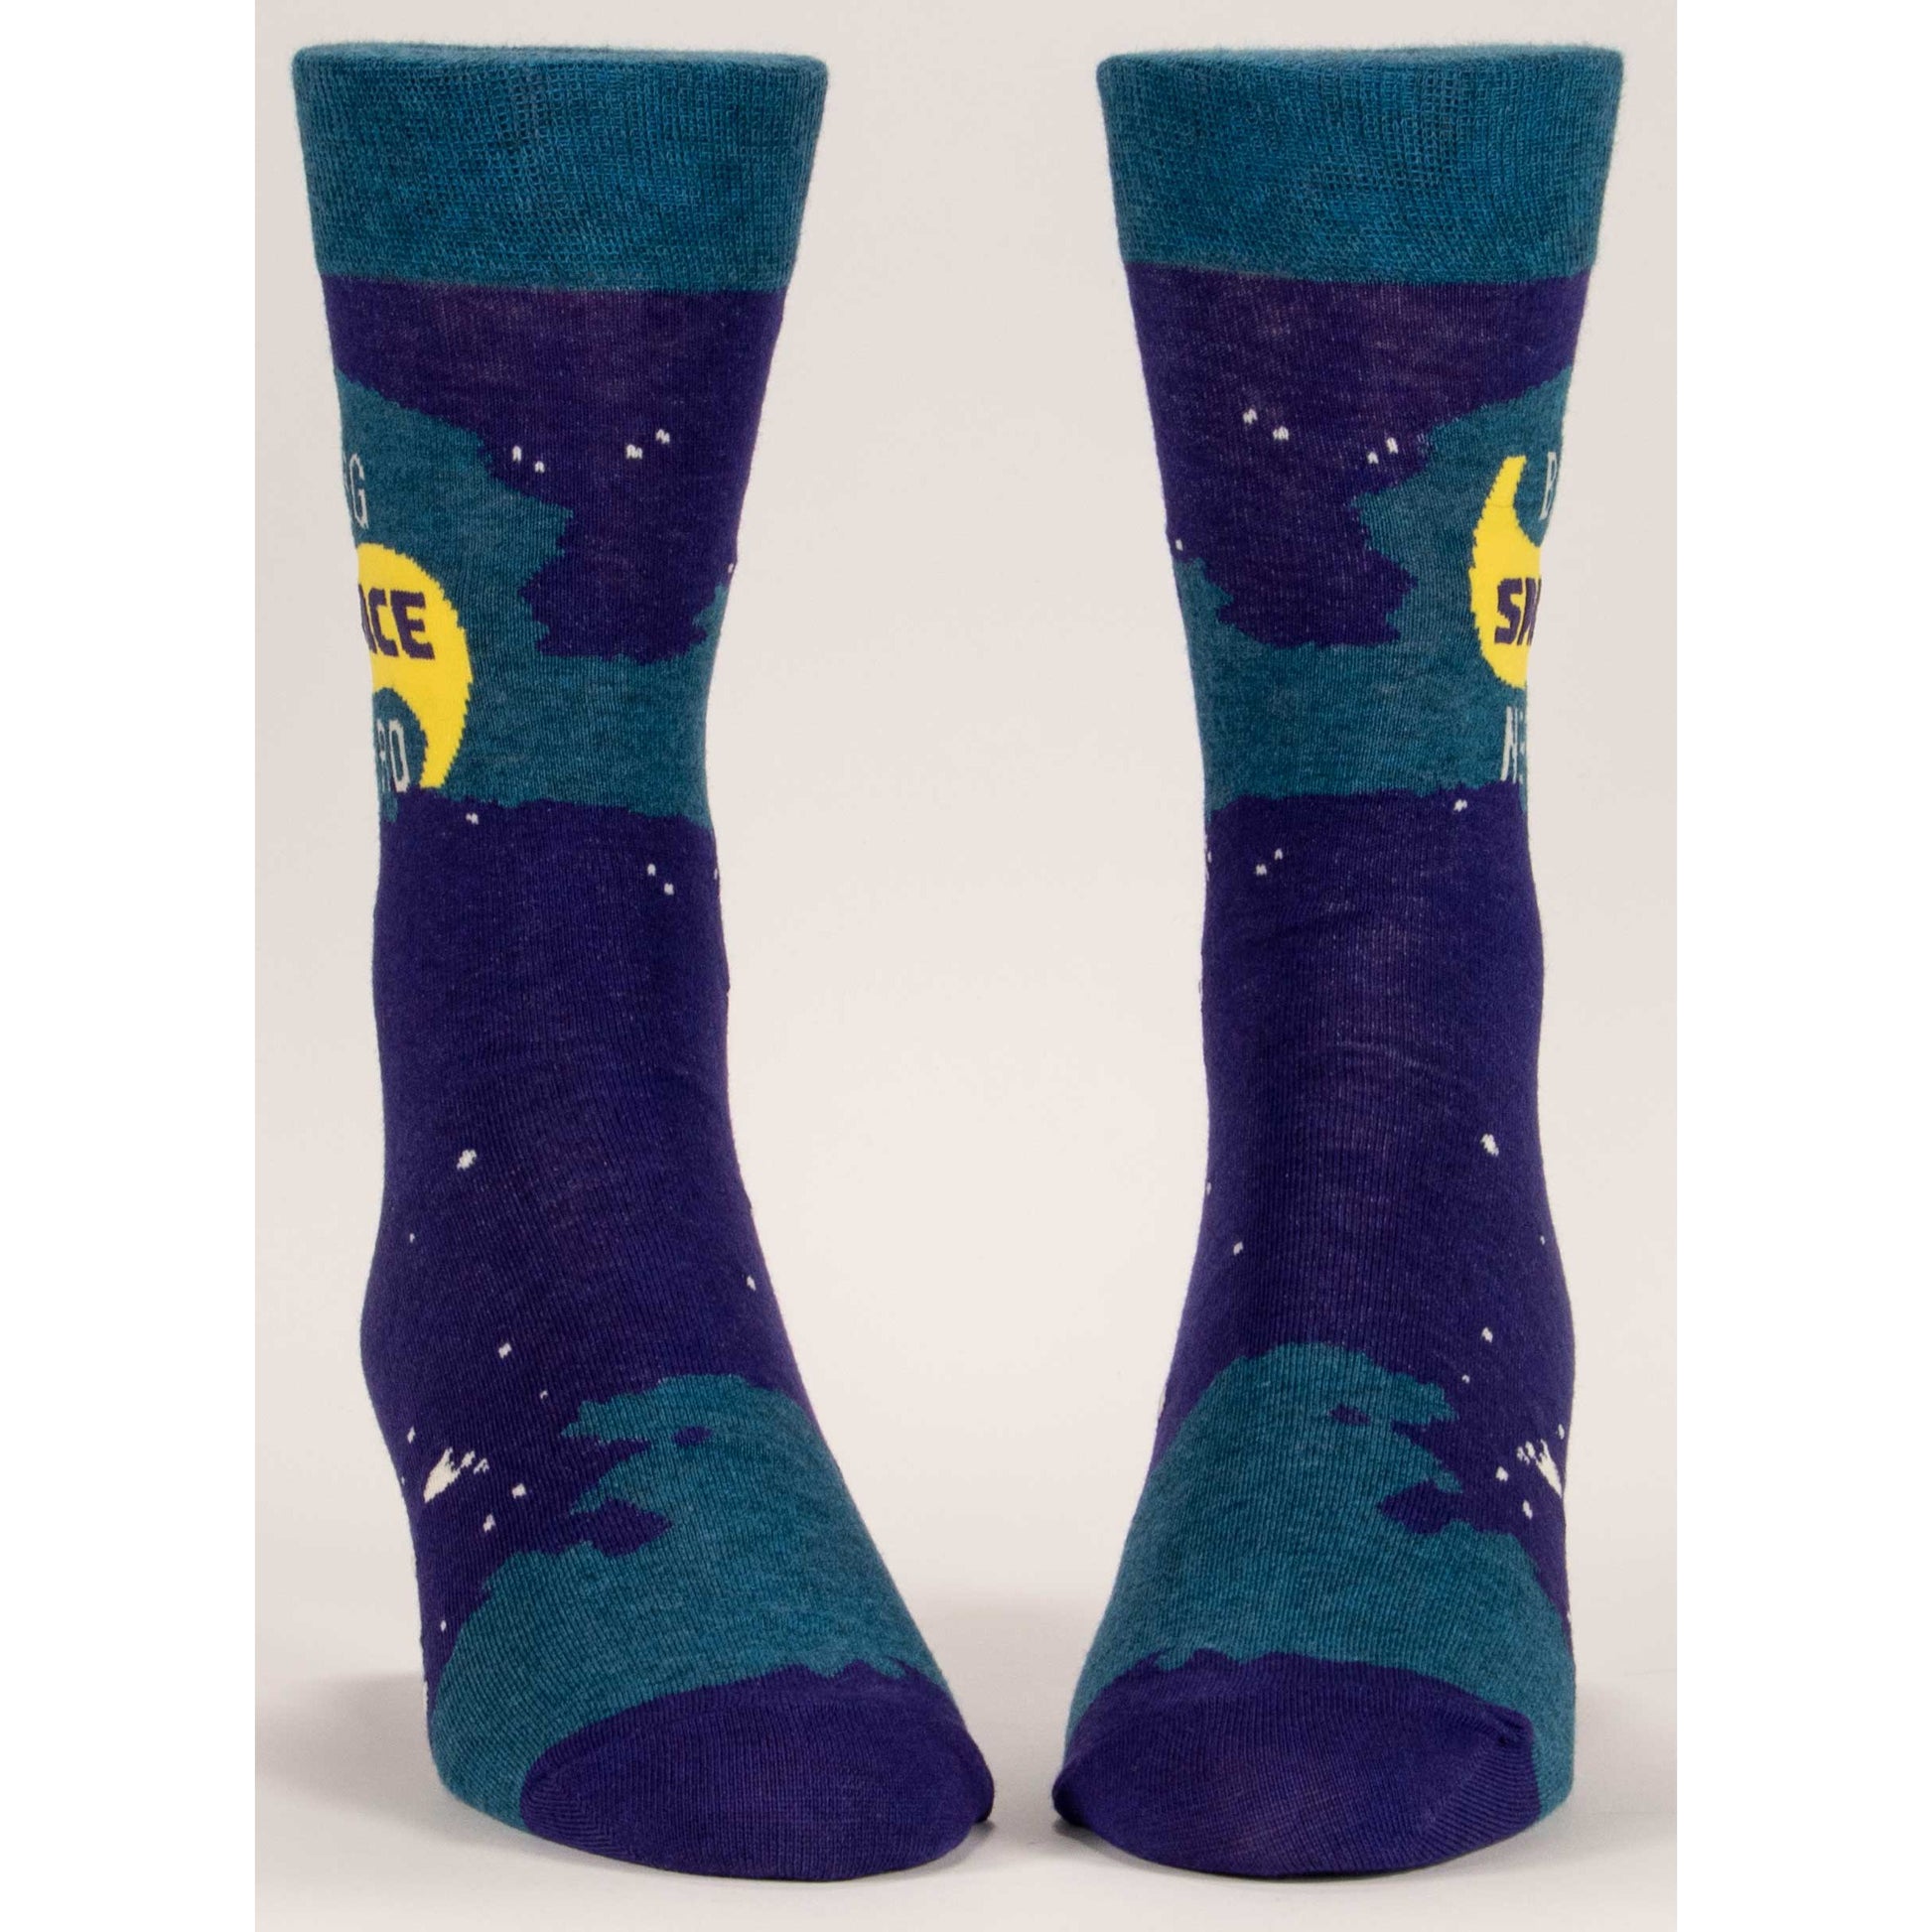 Big Space Nerd Men's Crew Socks | Funny Novelty Socks